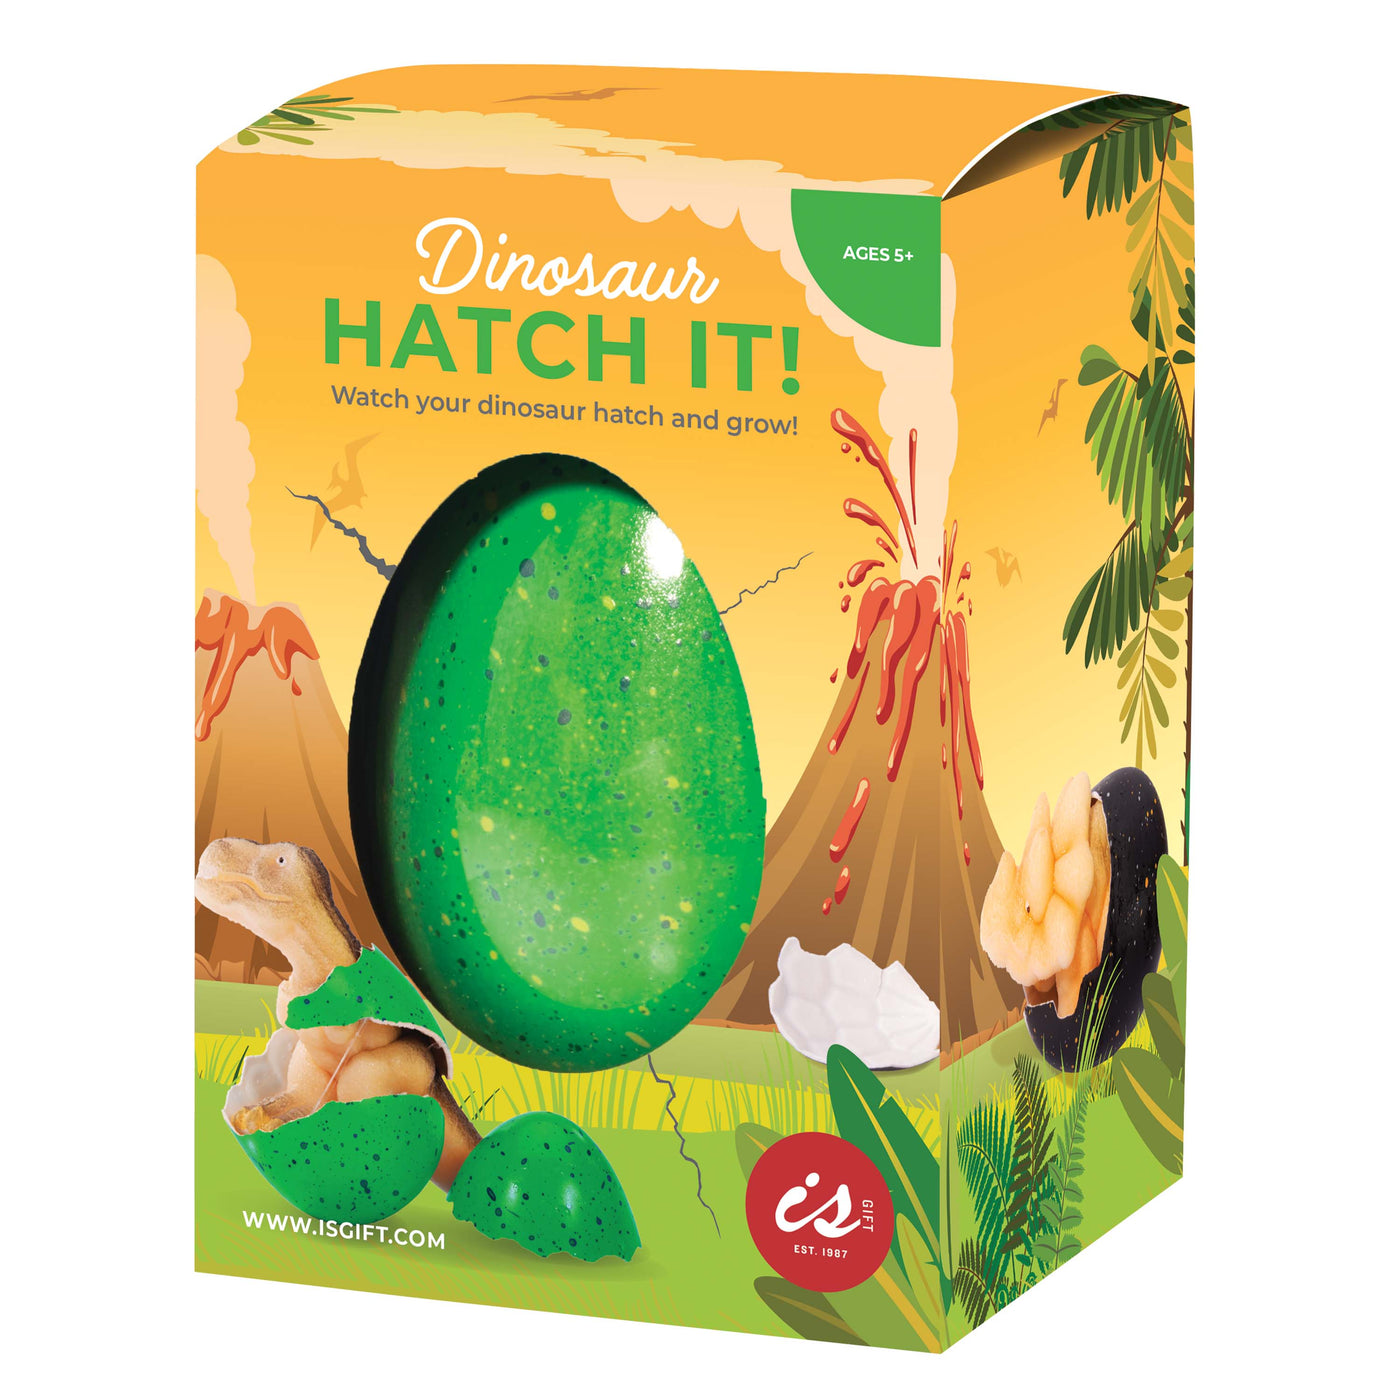 Hatch It! - Dinosaur Large